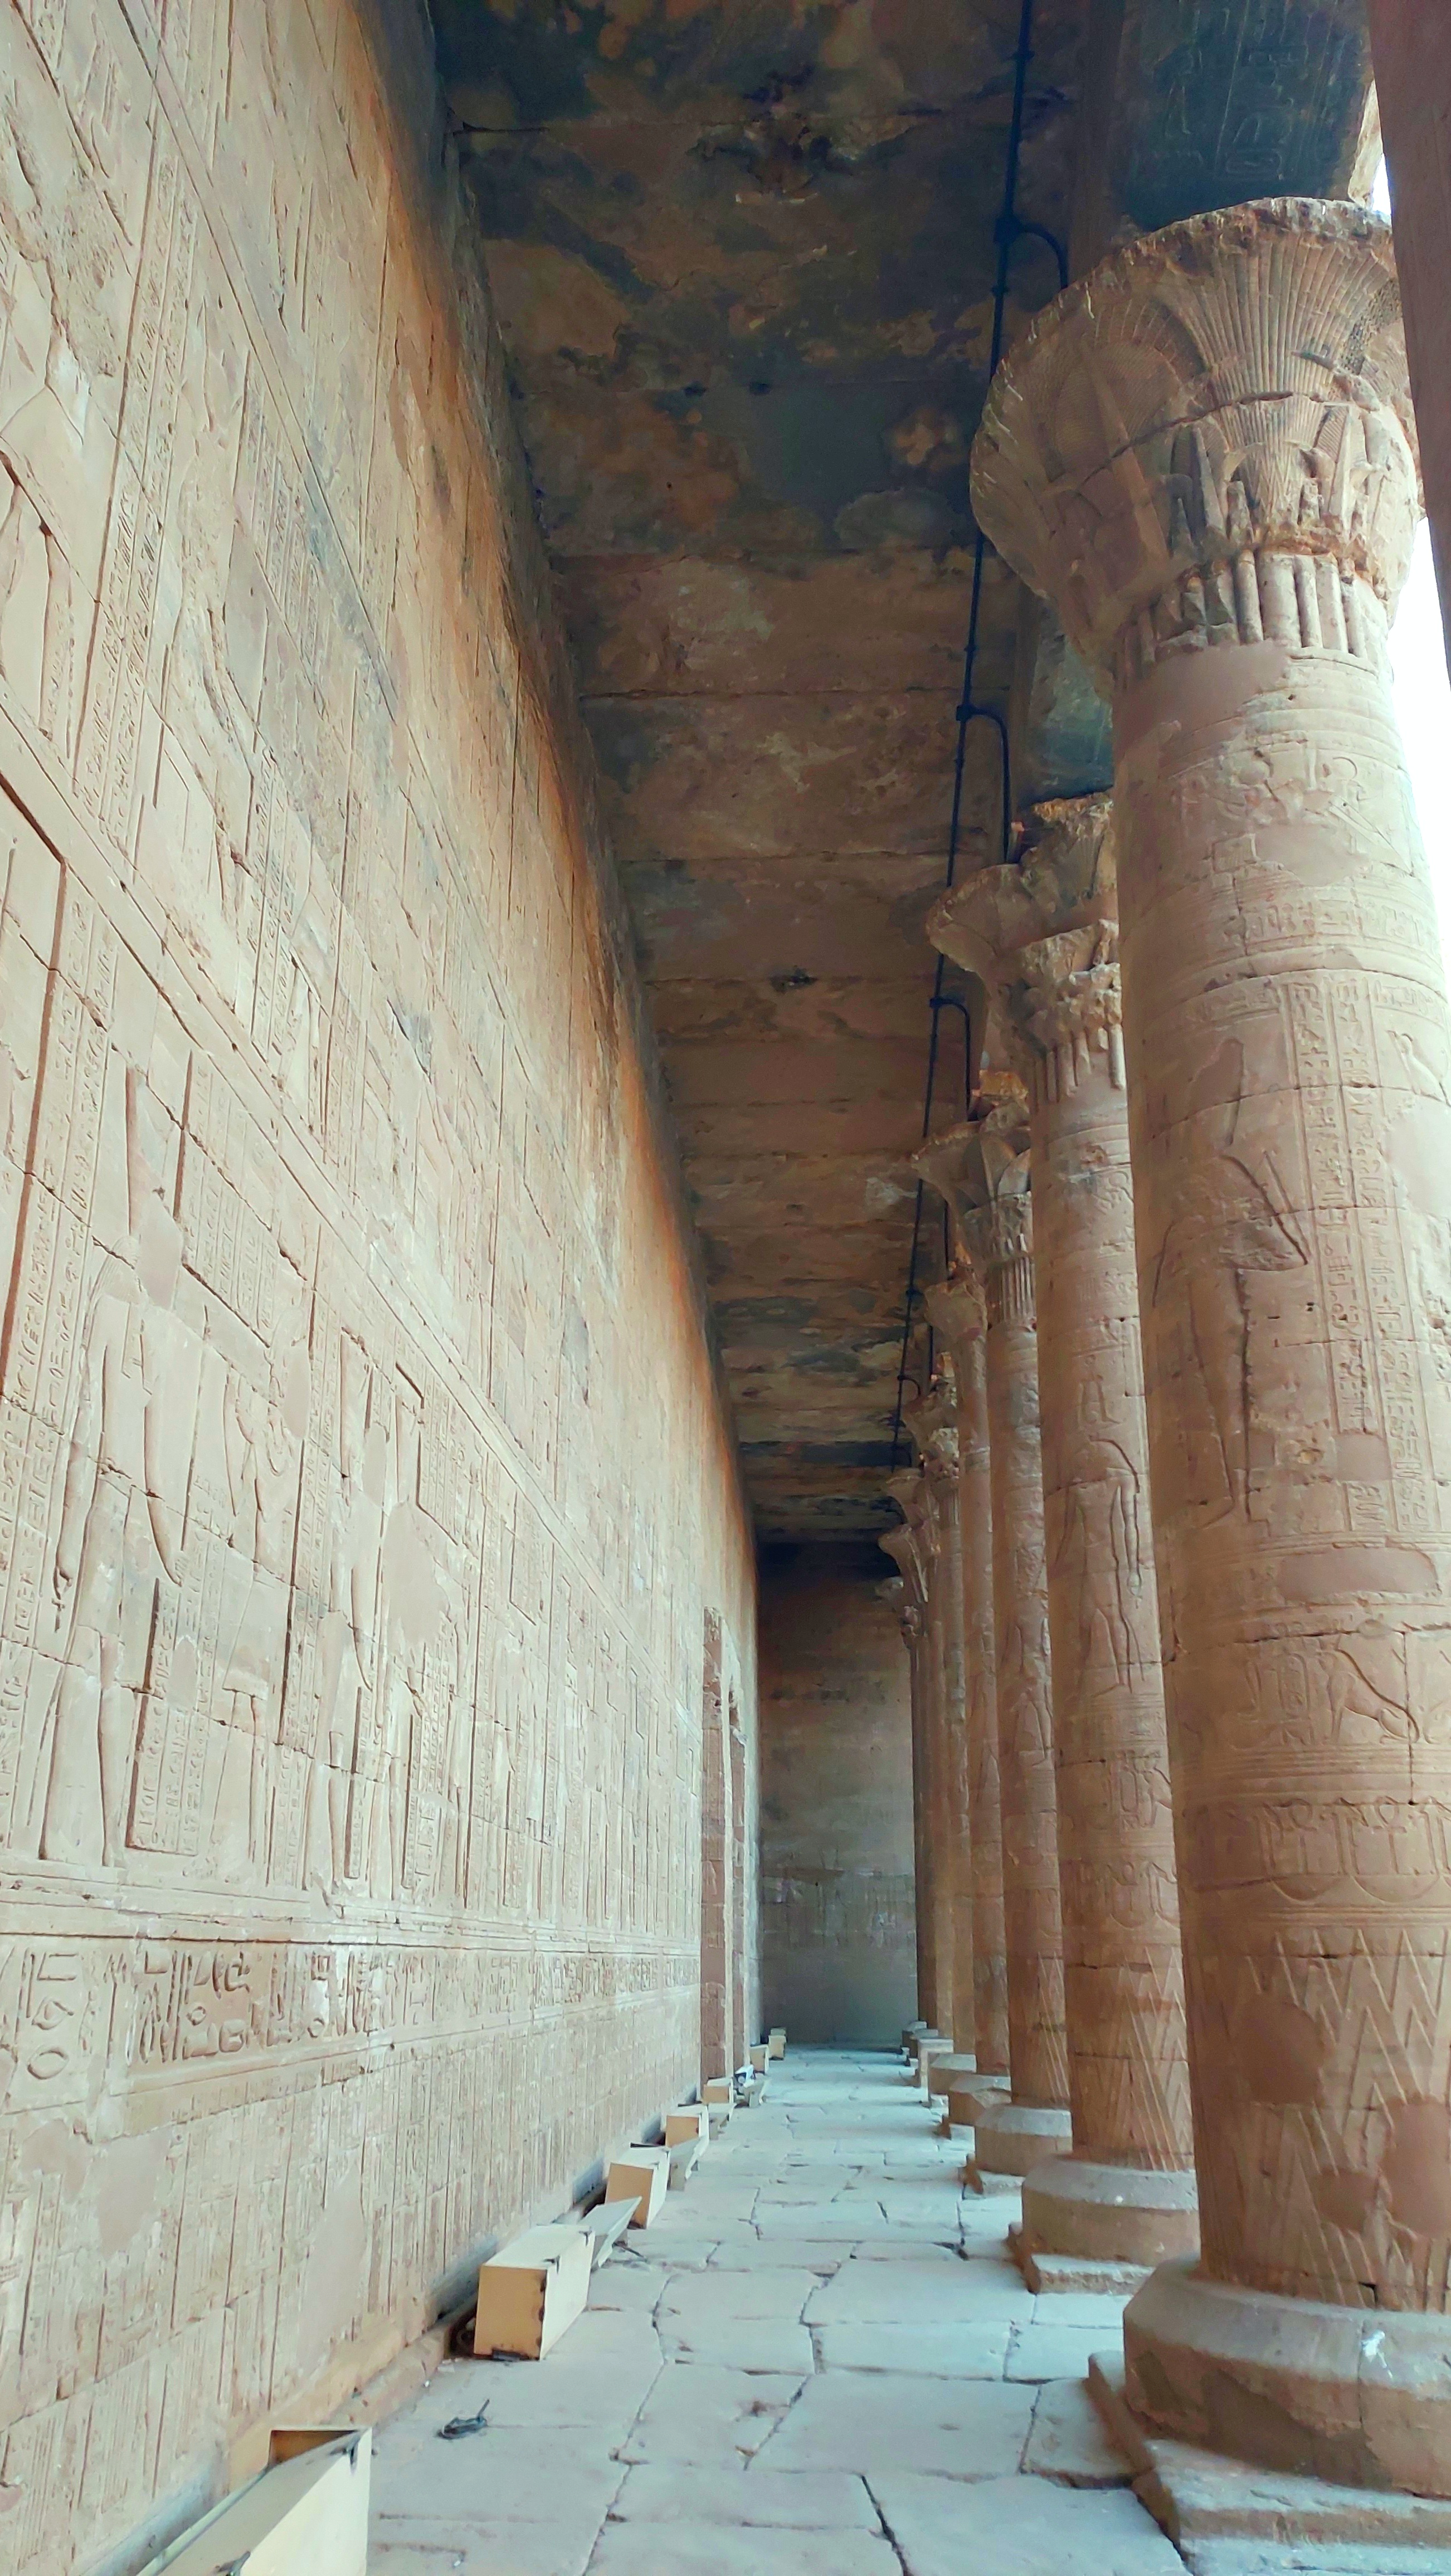 The pillars and hieroglyphics at Edfu Temple